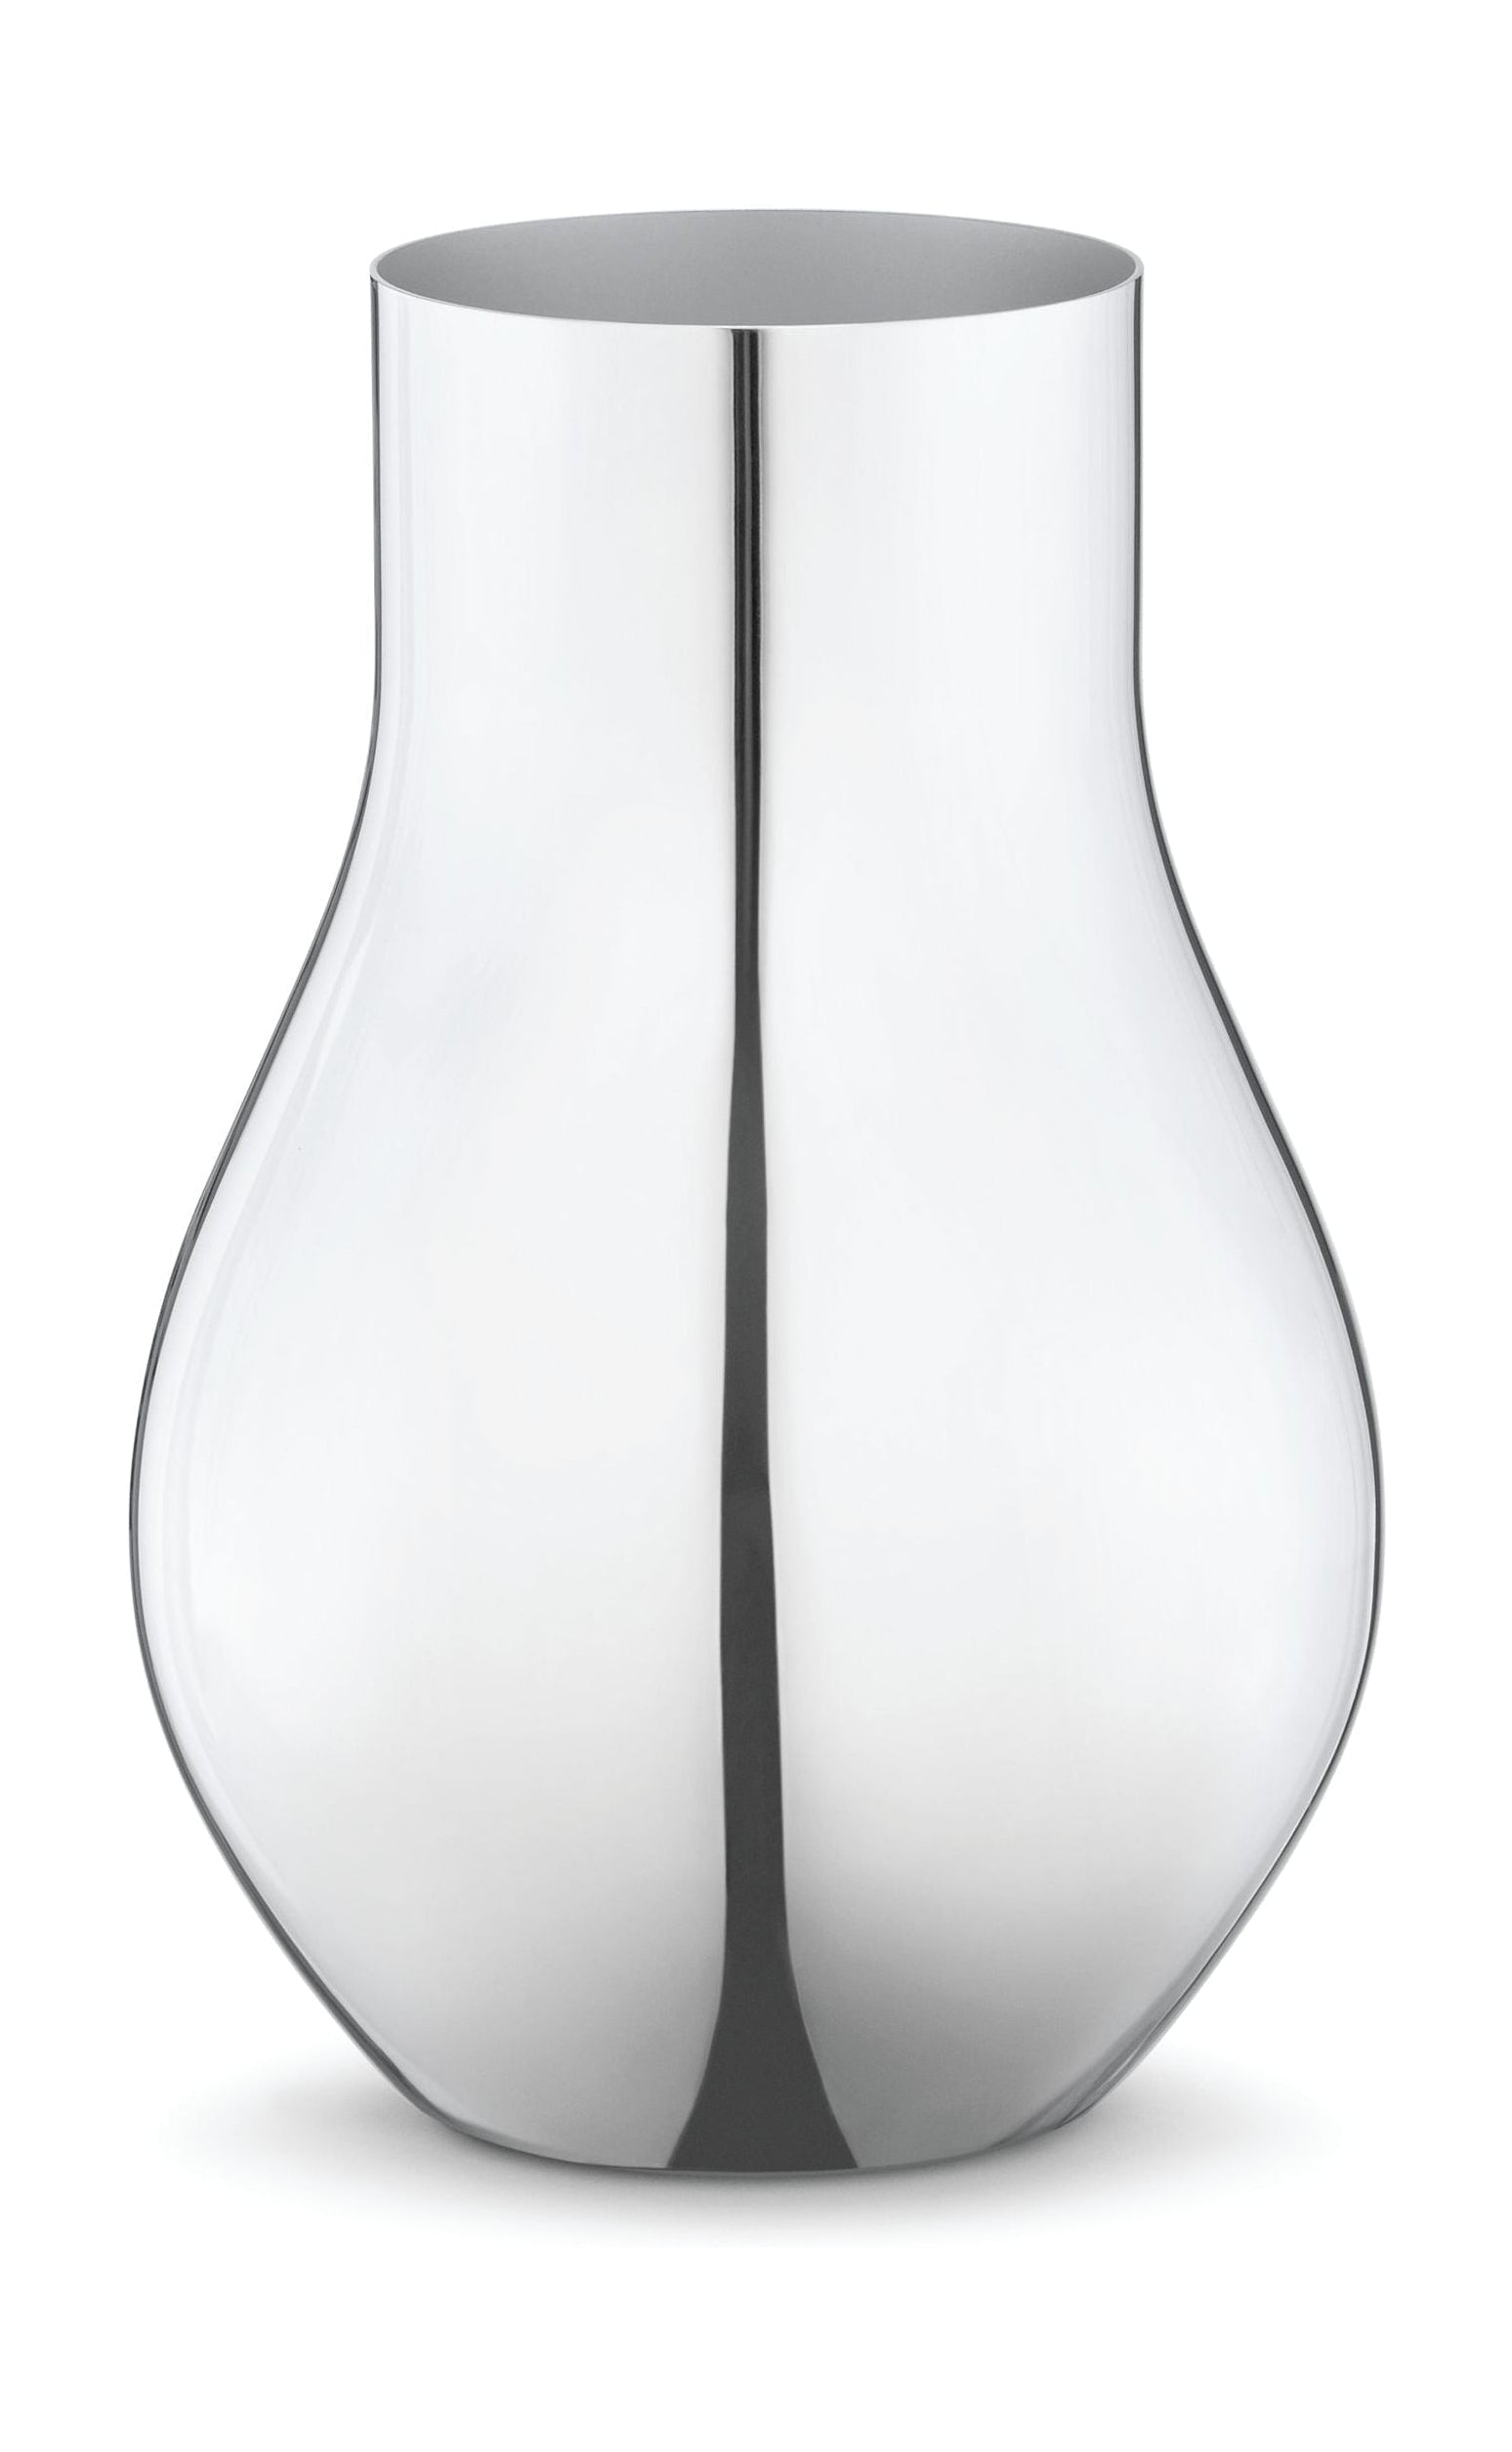 Georg Jensen Cafu Vase rostfritt stål, 21,6 cm